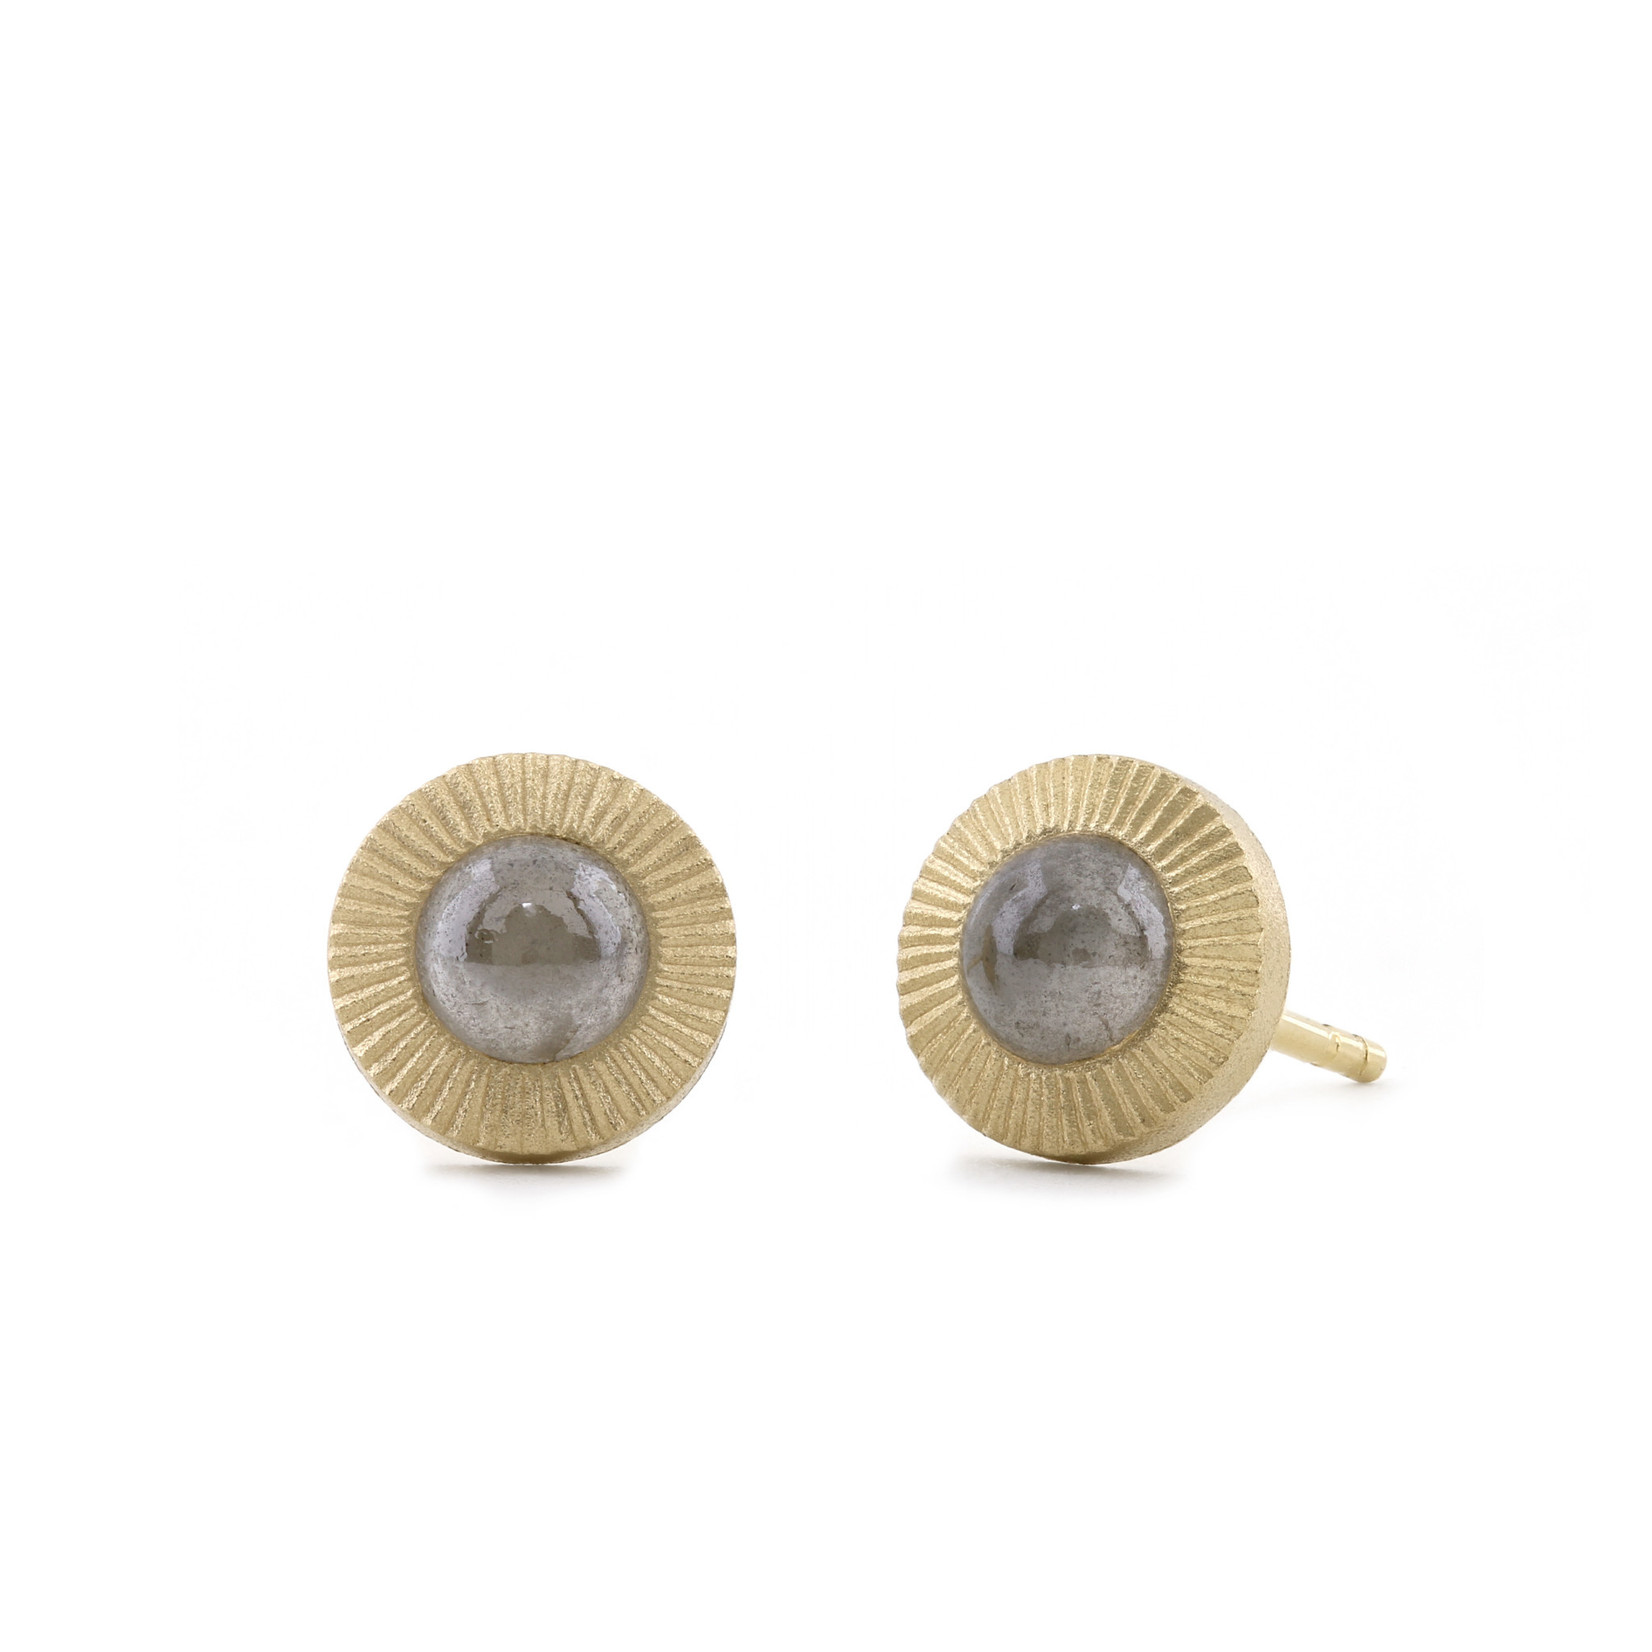 Baxter Moerman Maya Stud Earrings with Cabochon Gray Diamond in Yellow Gold